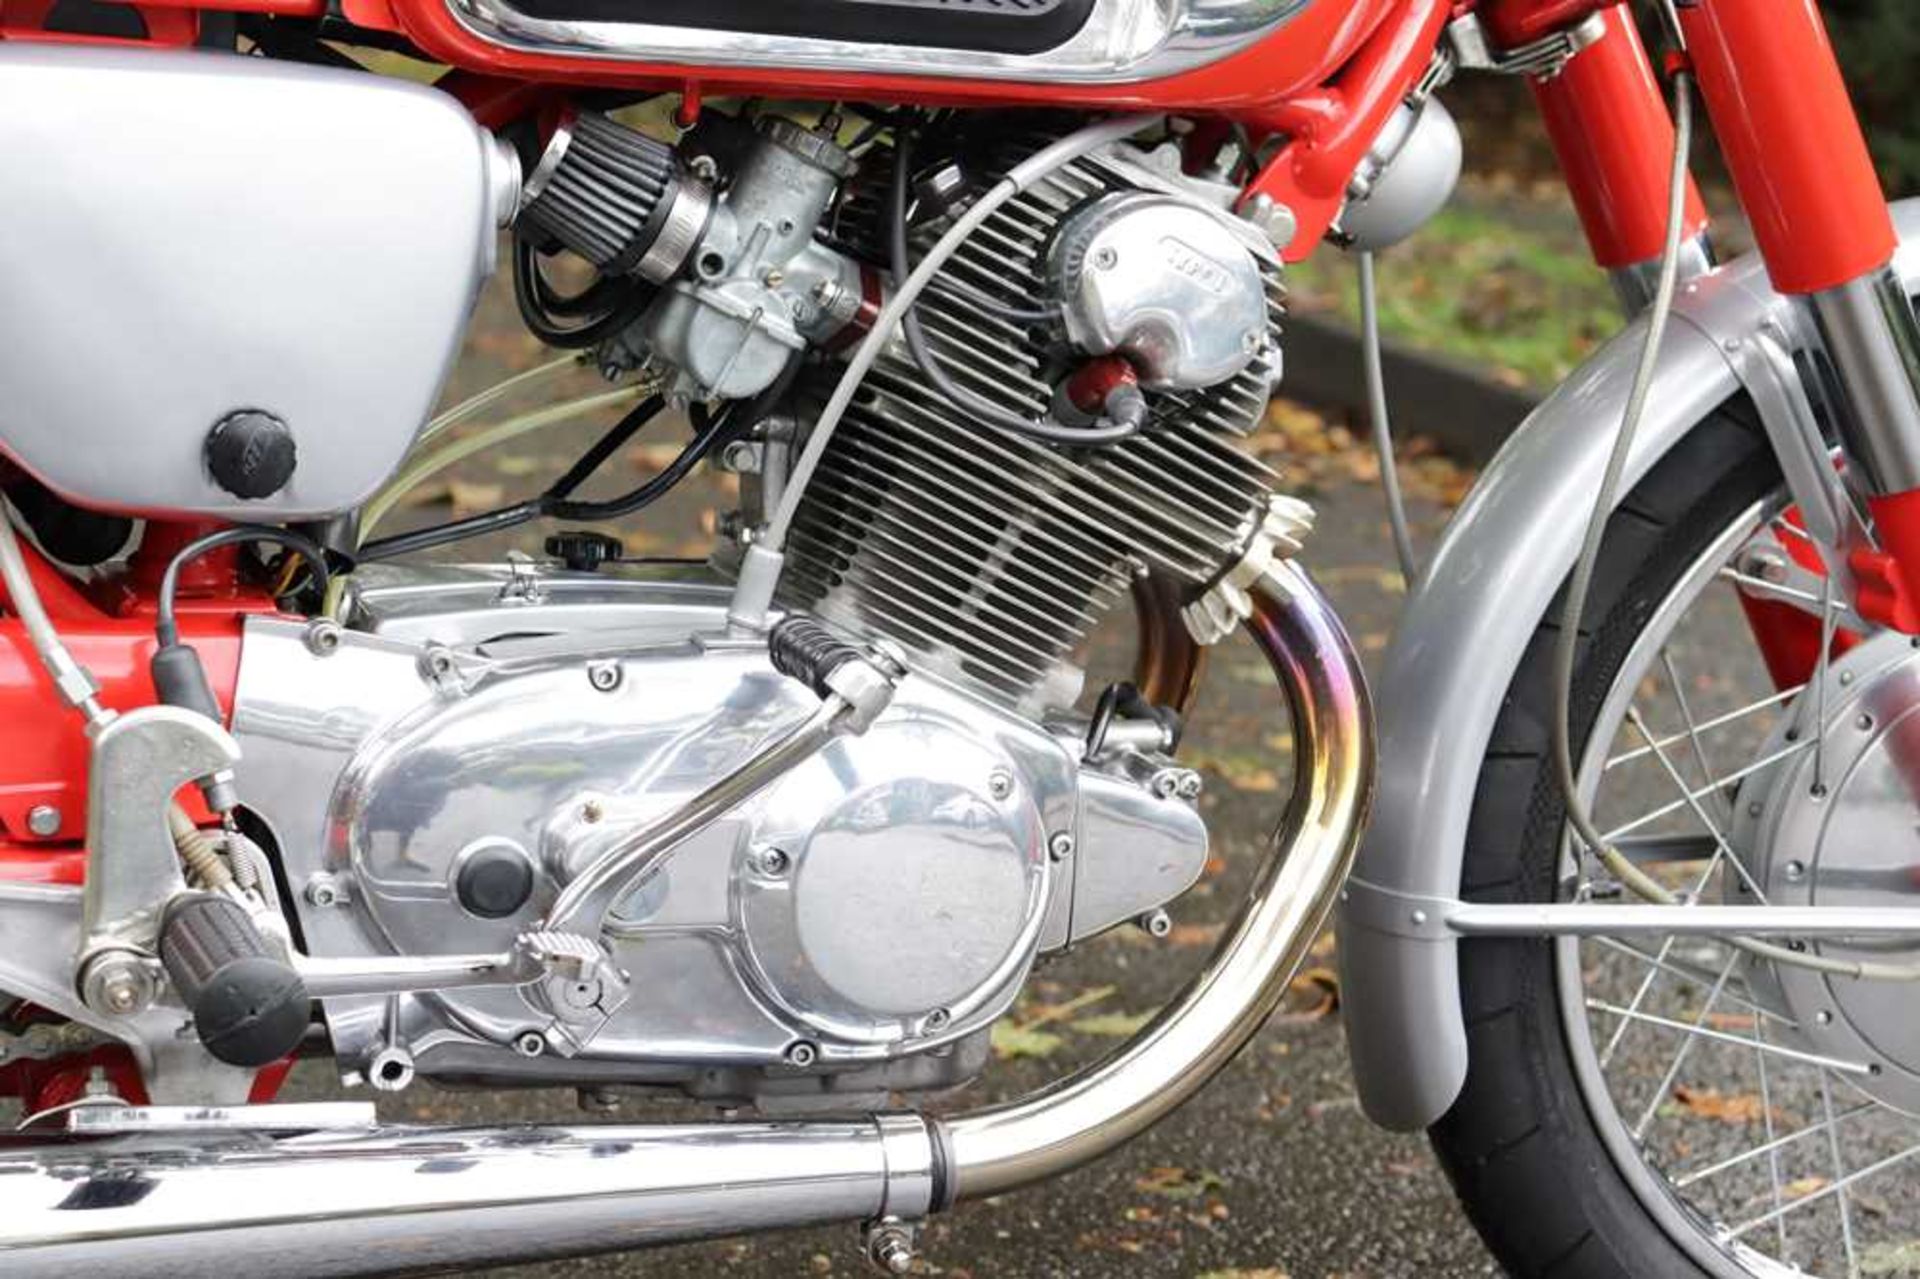 1966 Honda CB77 Restored to a high standard - Image 13 of 65